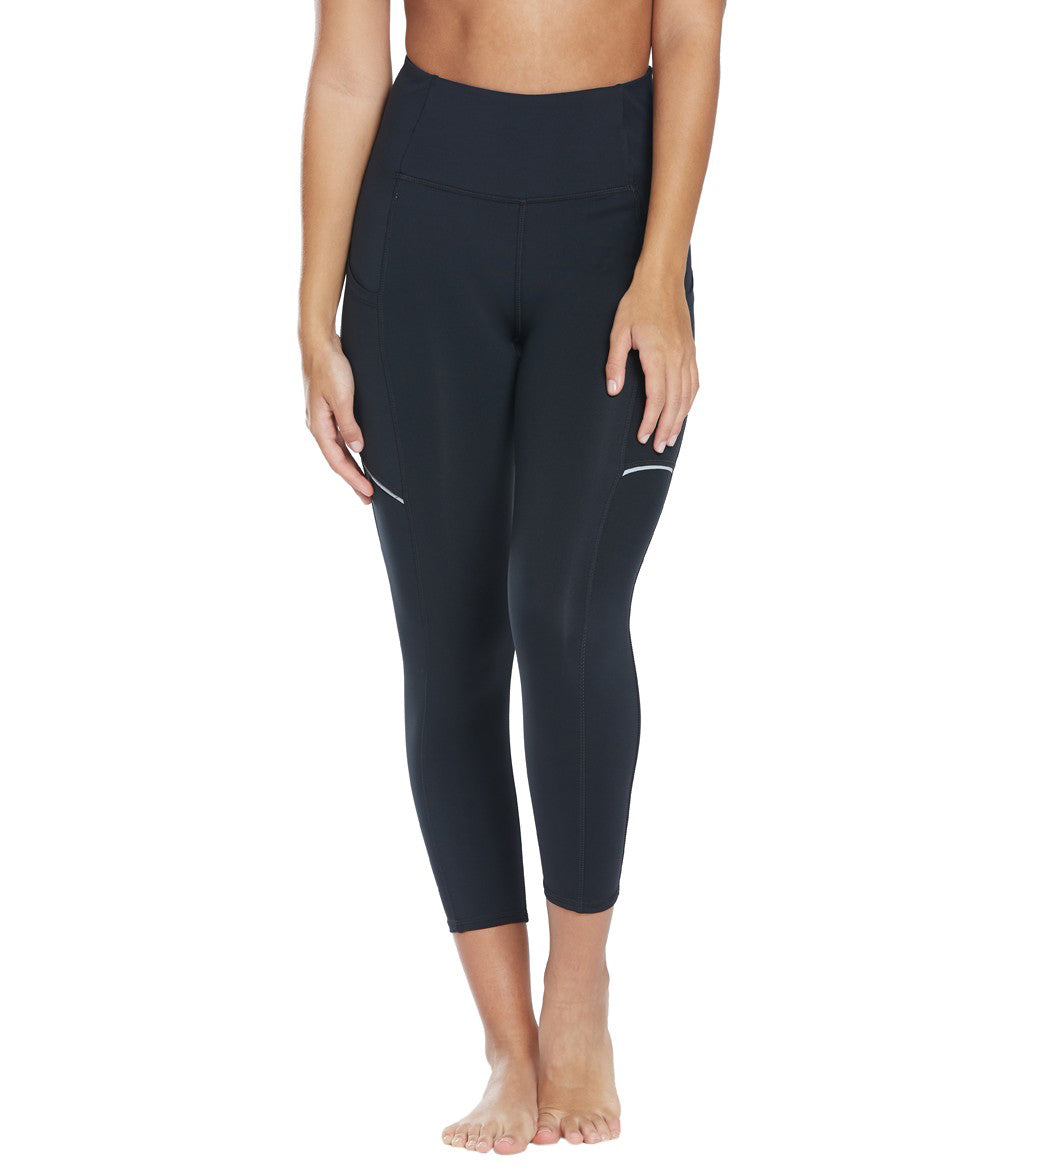 NWT Marika Black Stretch Women Sport Athletic Yoga Pants Size S